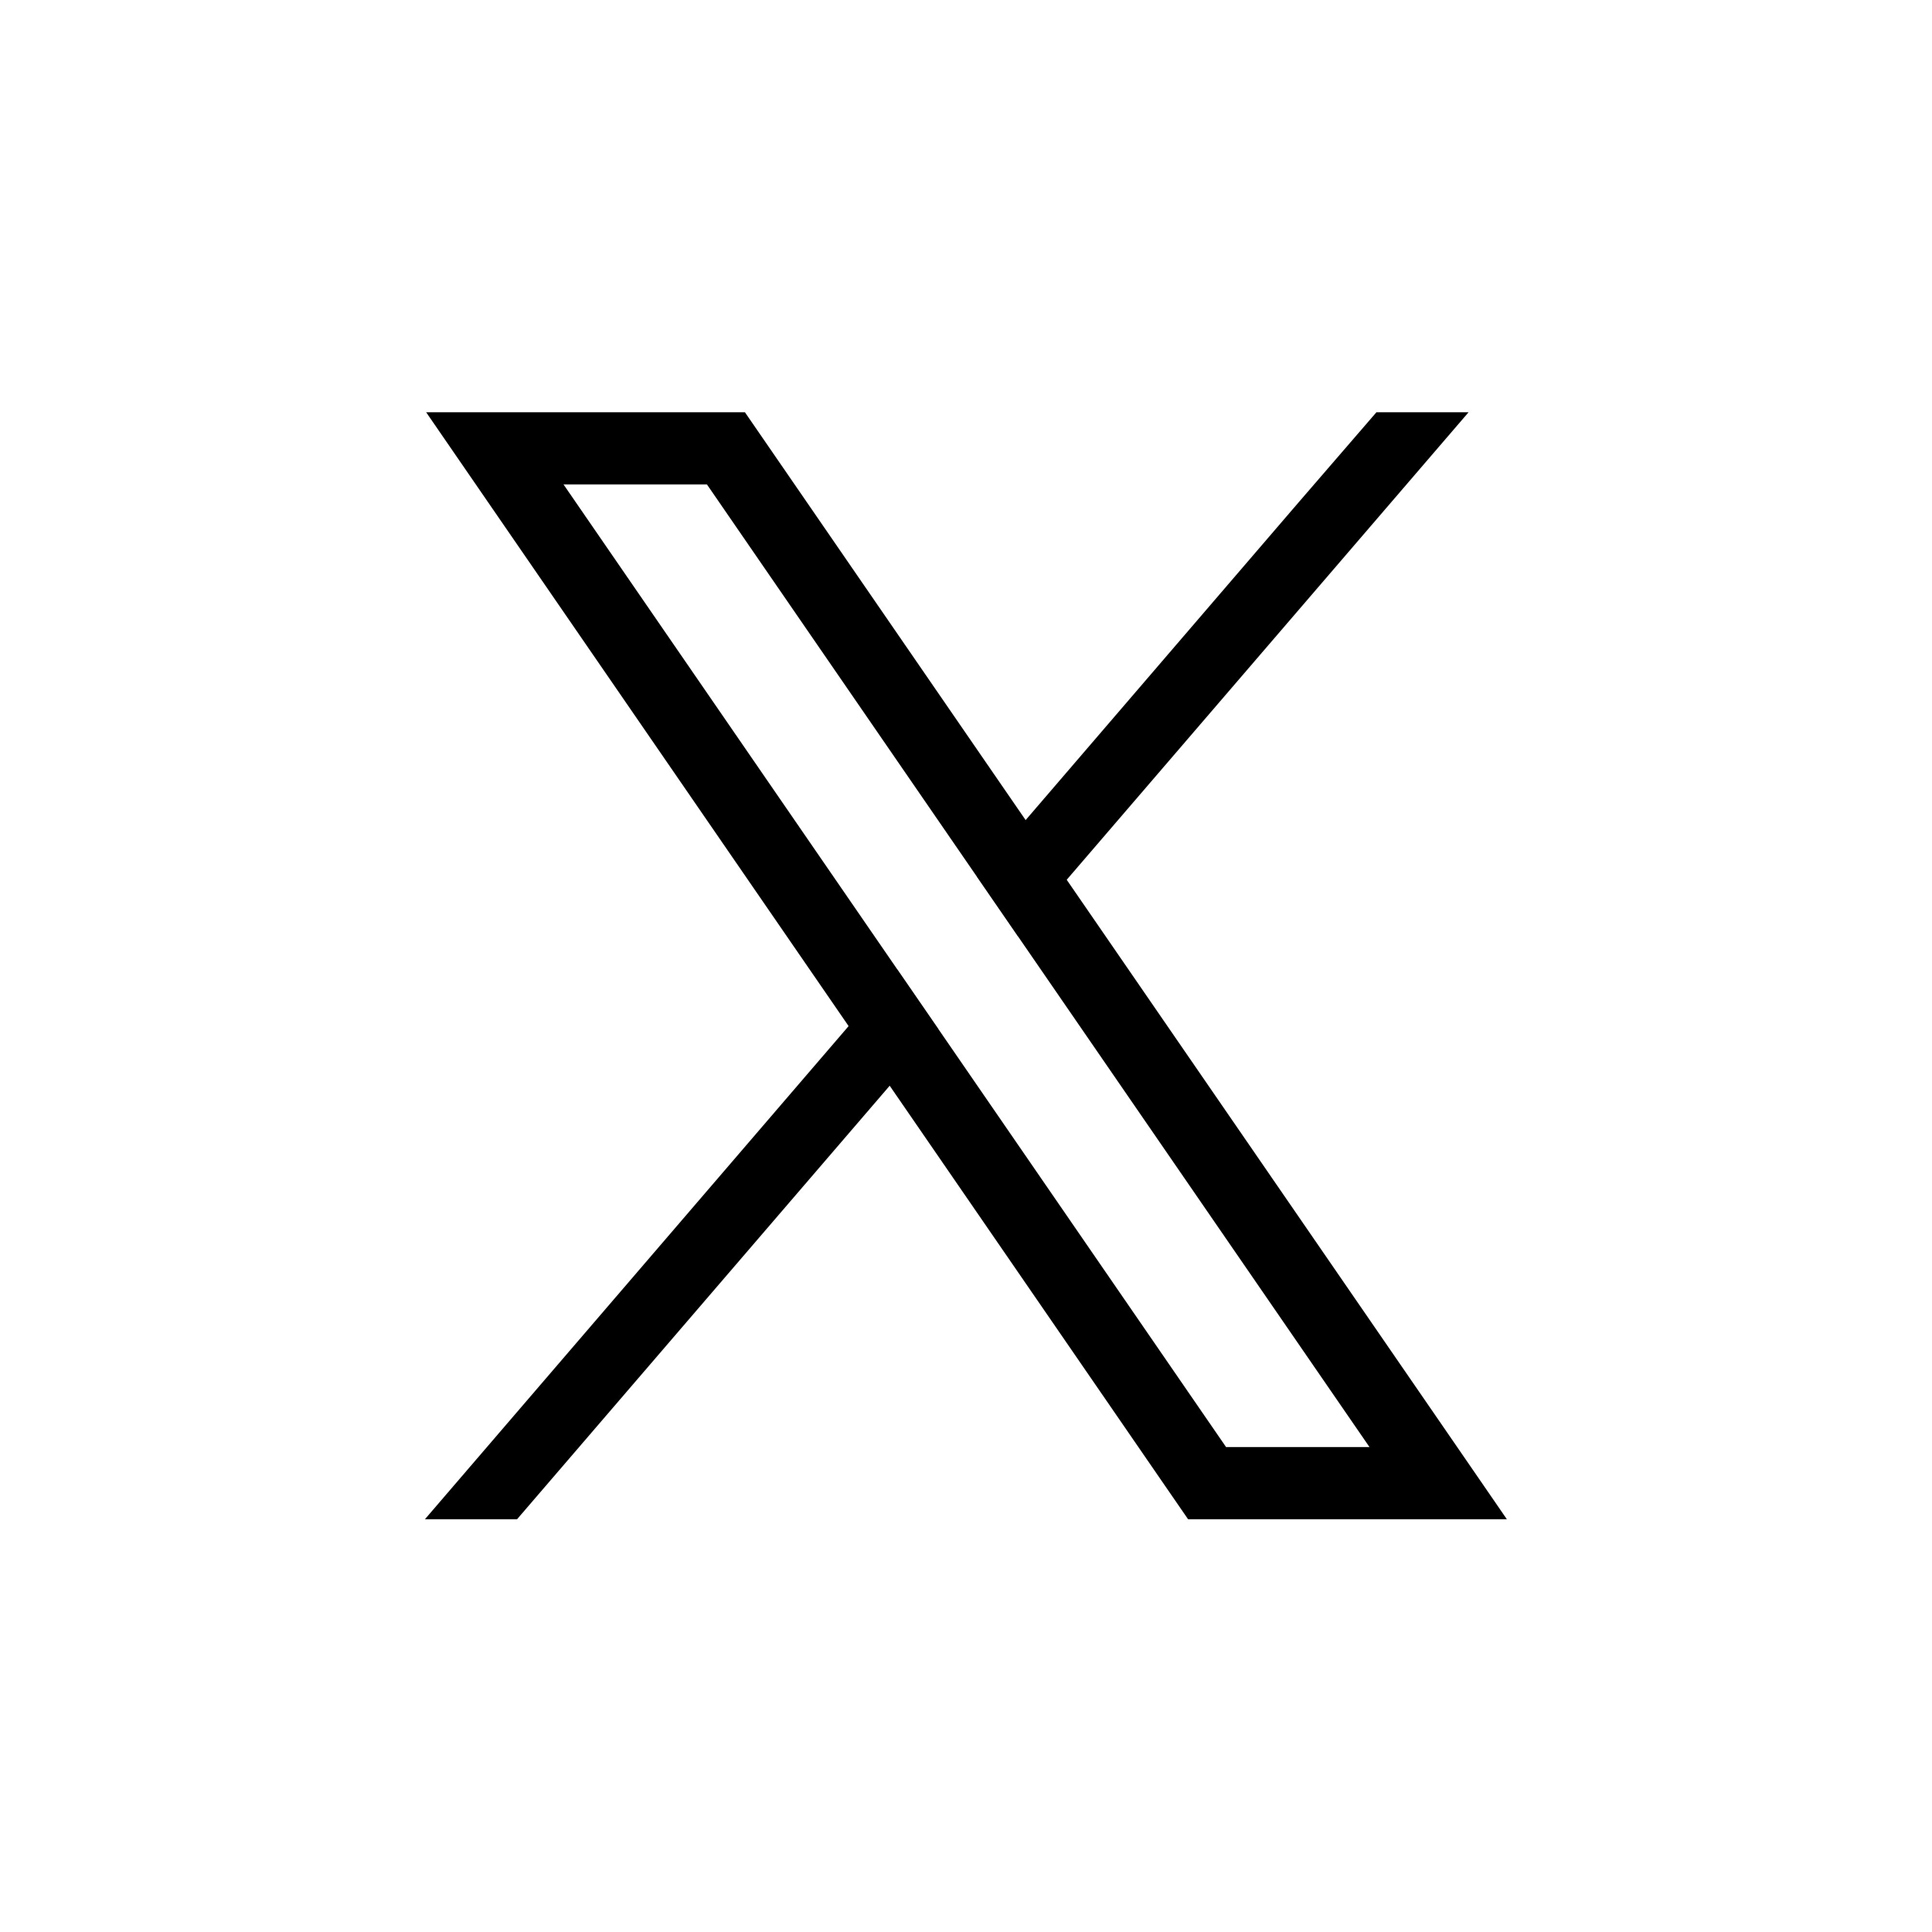 X twitter logo